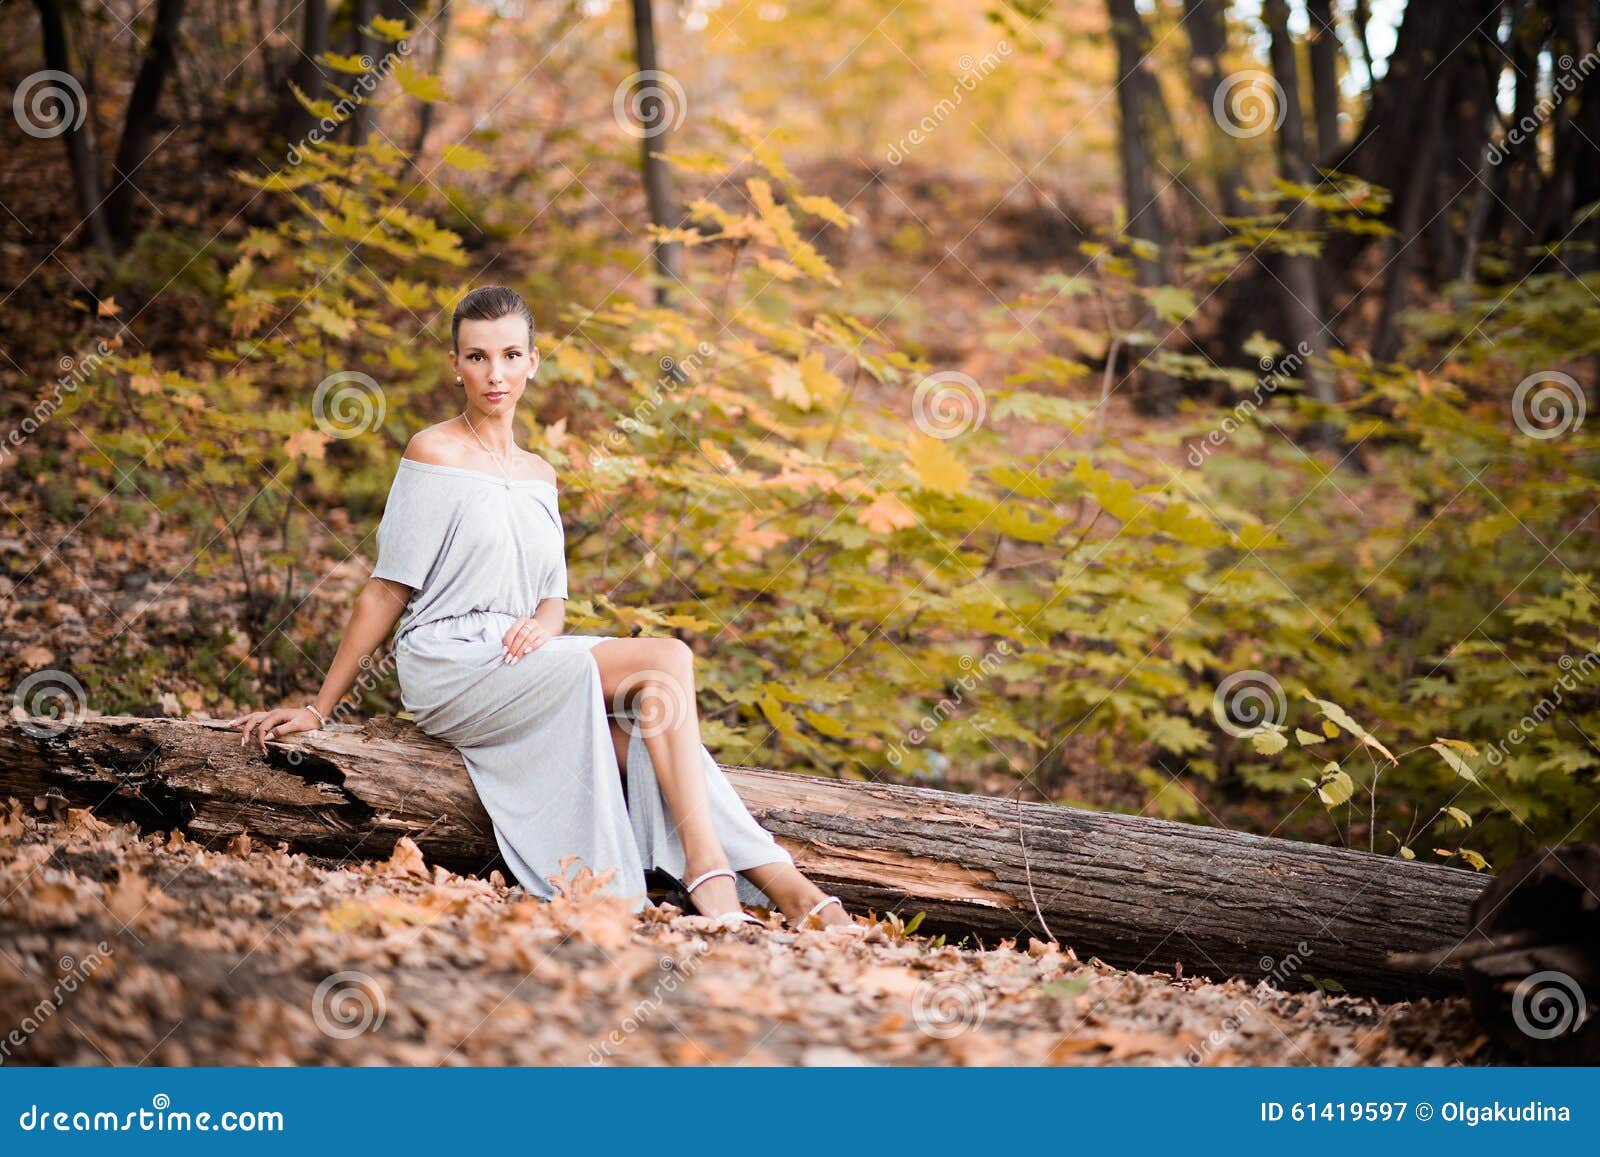 Beautiful woman on a log stock image. Image of portrait - 61419597